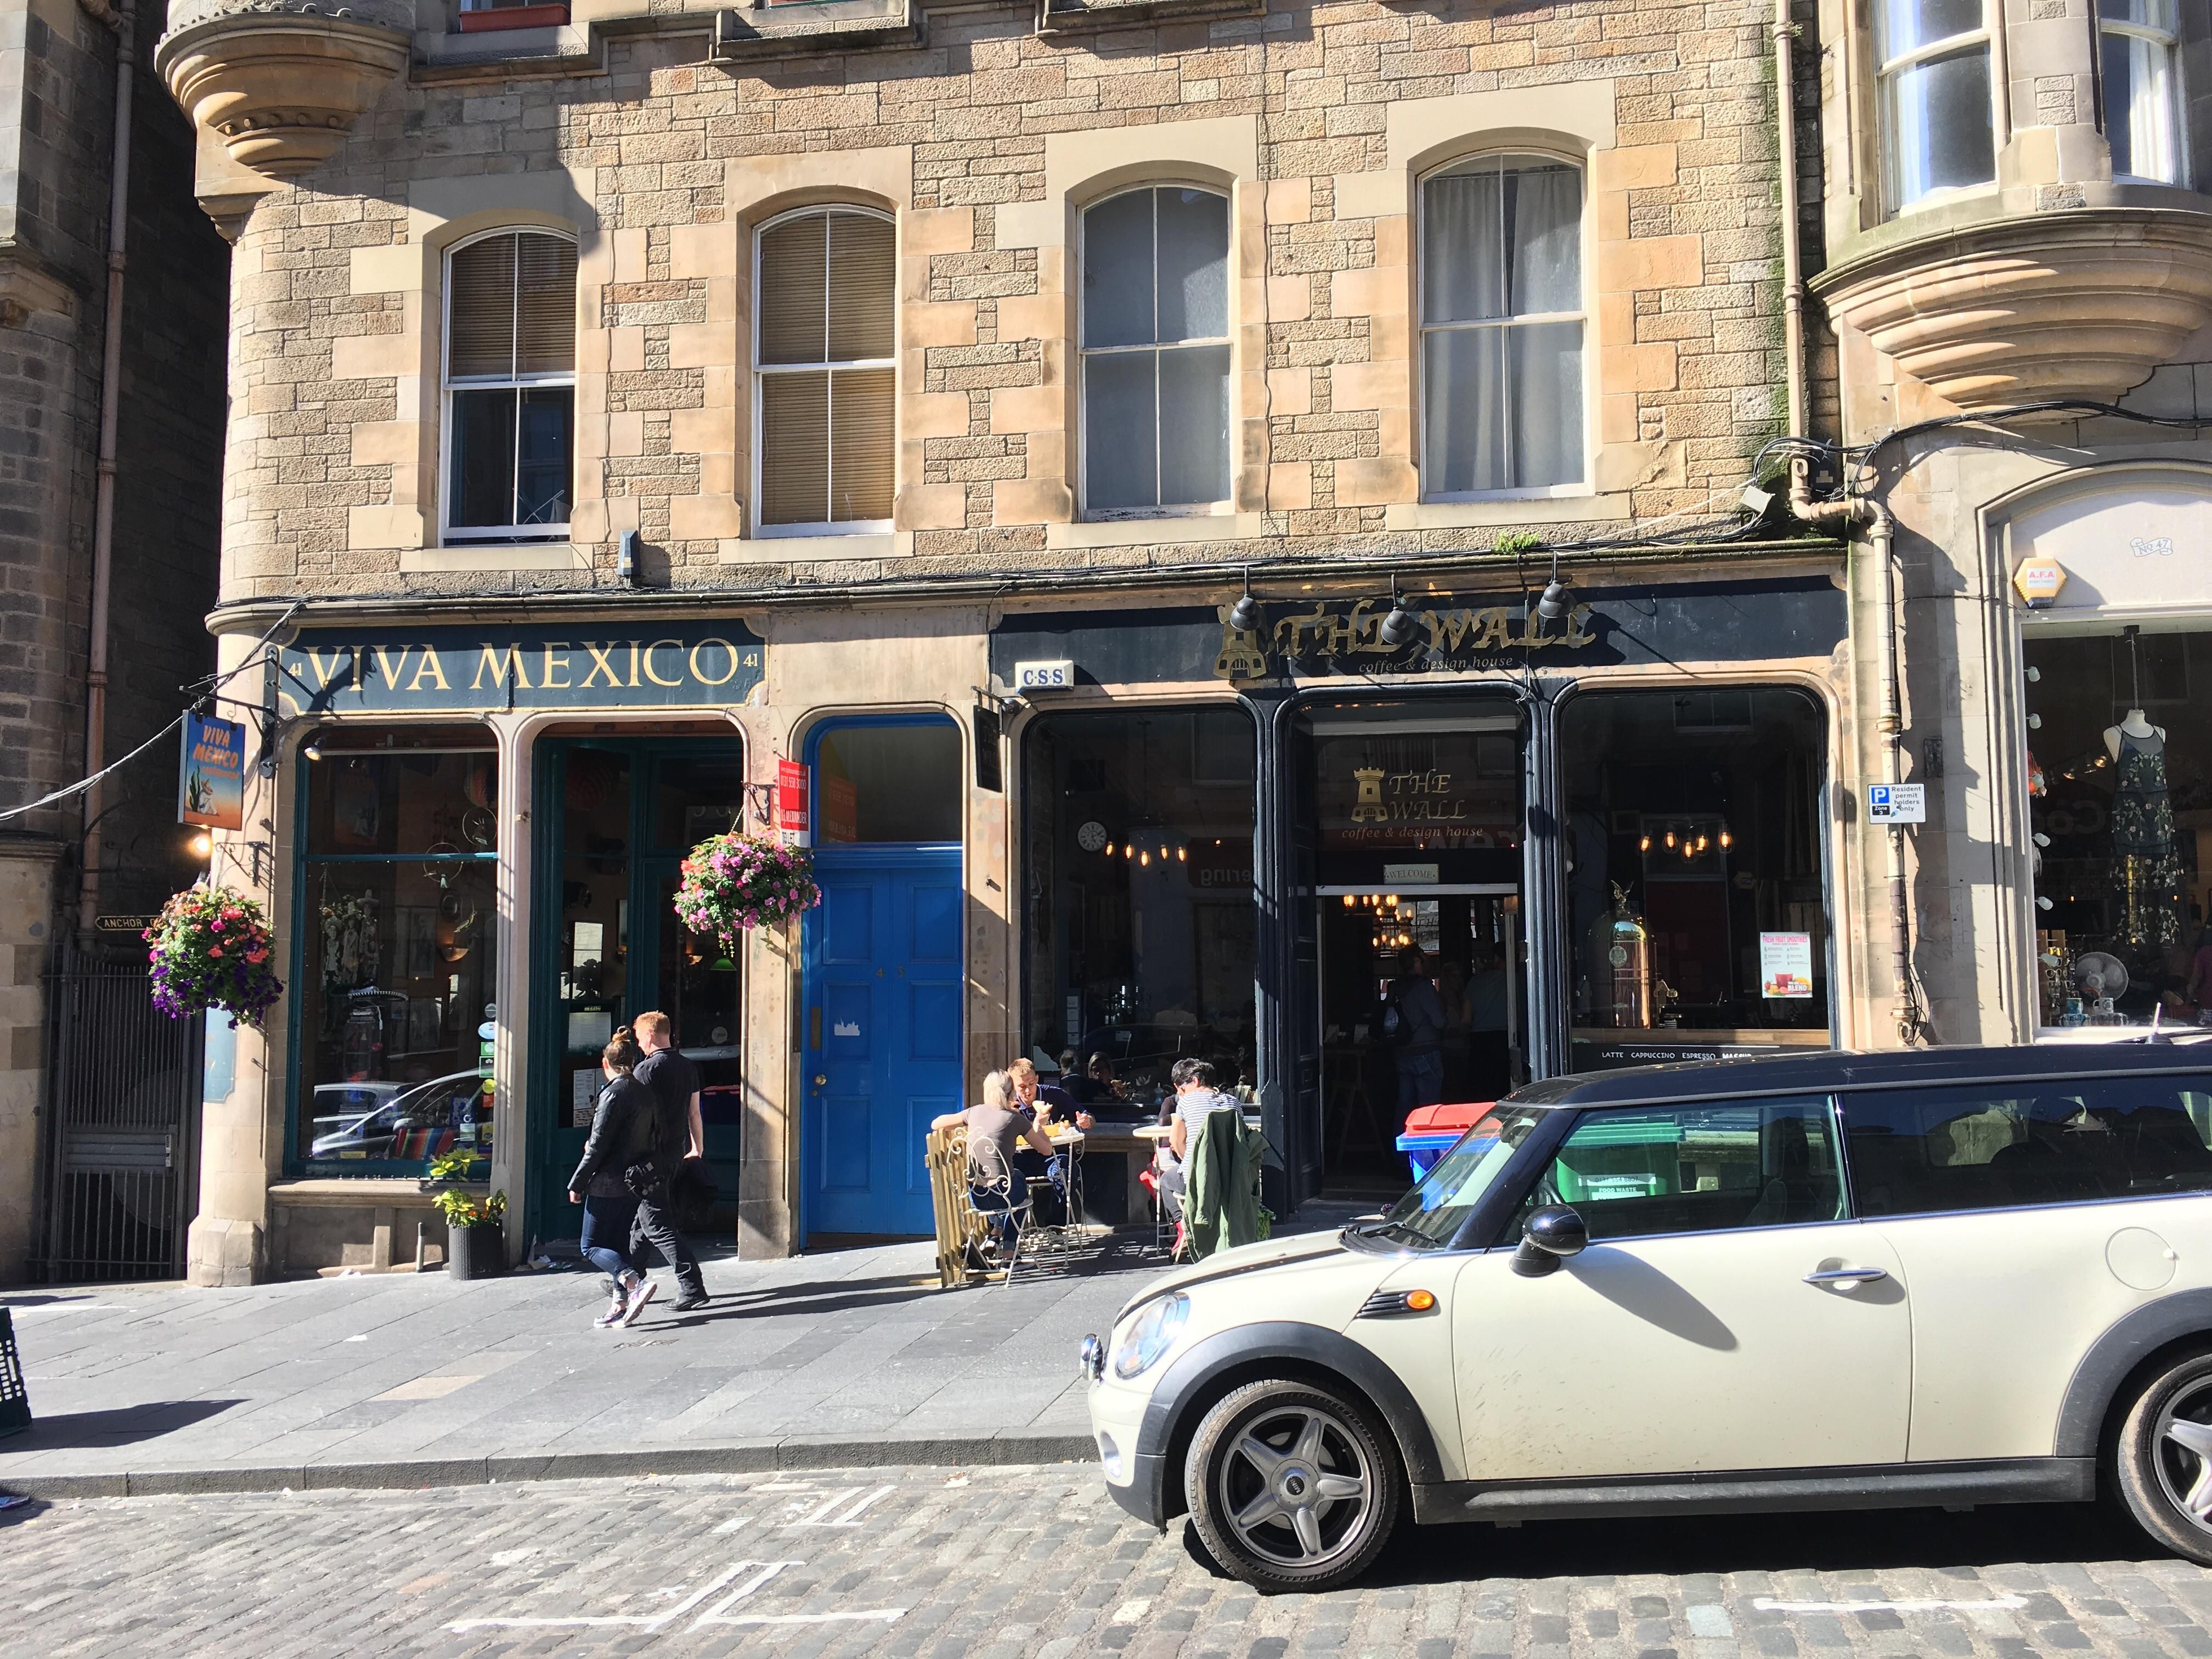 Two adjacent restaurants in Edinburgh